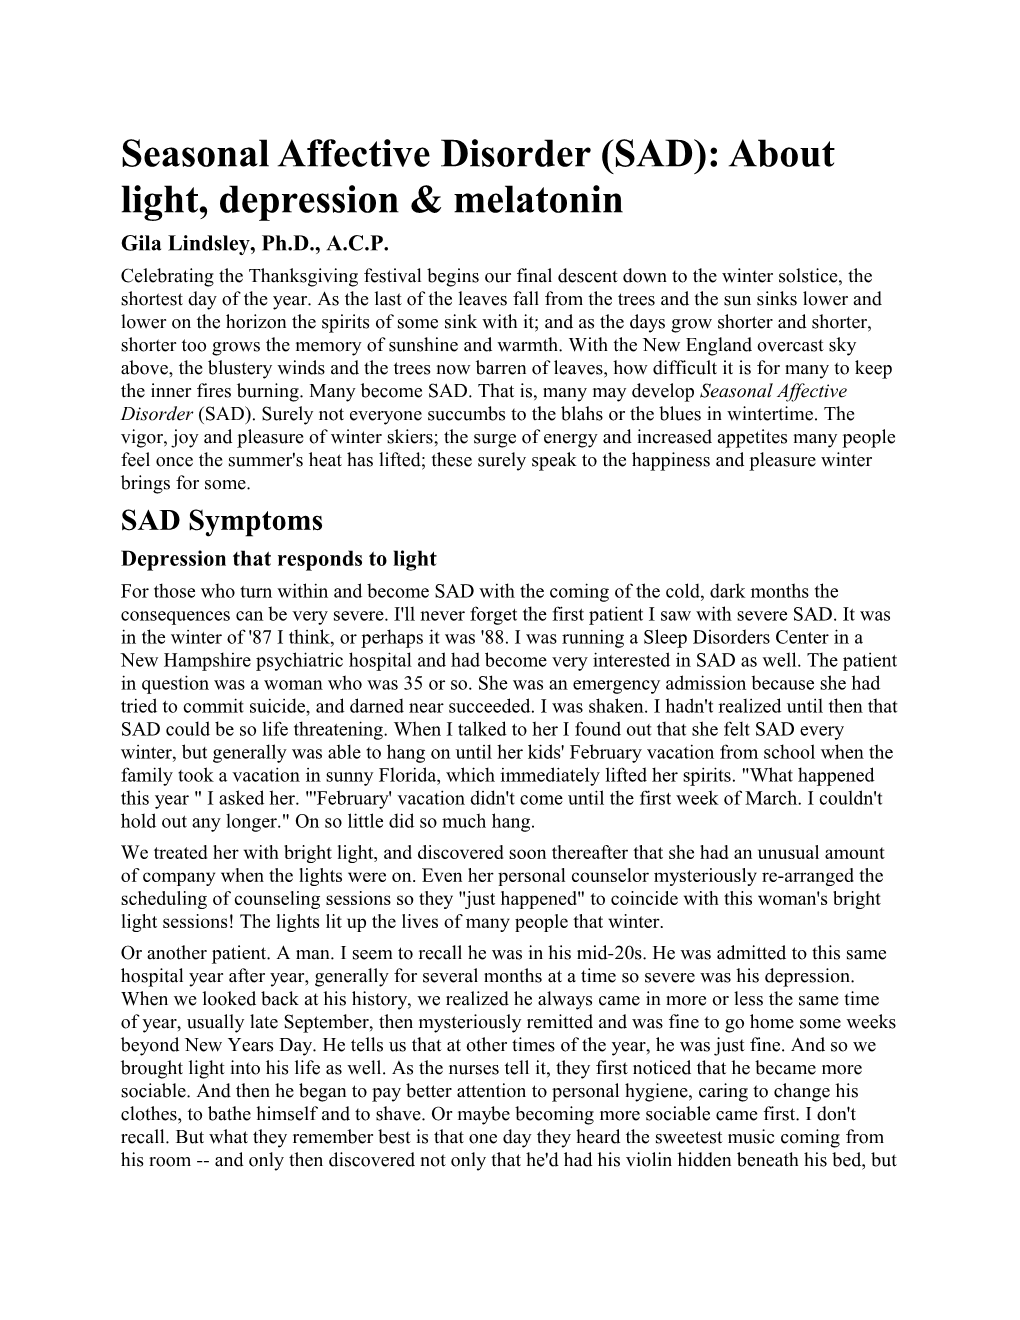 Seasonal Affective Disorder (SAD): About Light, Depression & Melatonin